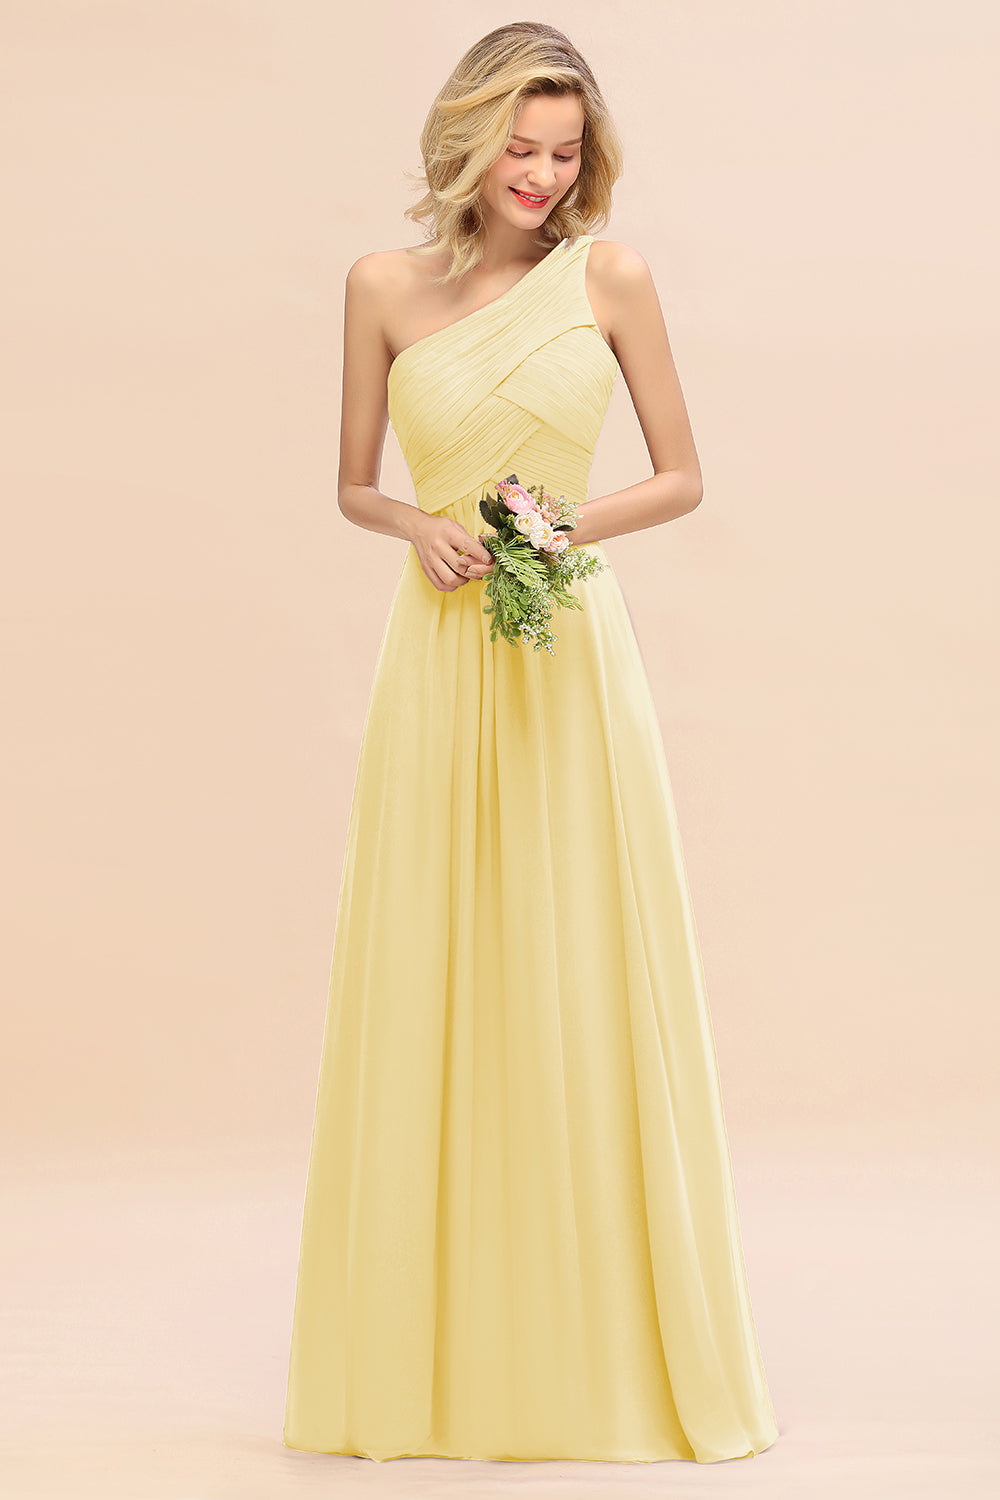 Chic One Shoulder Ruffle Grape Chiffon Bridesmaid Dresses Online-27dress